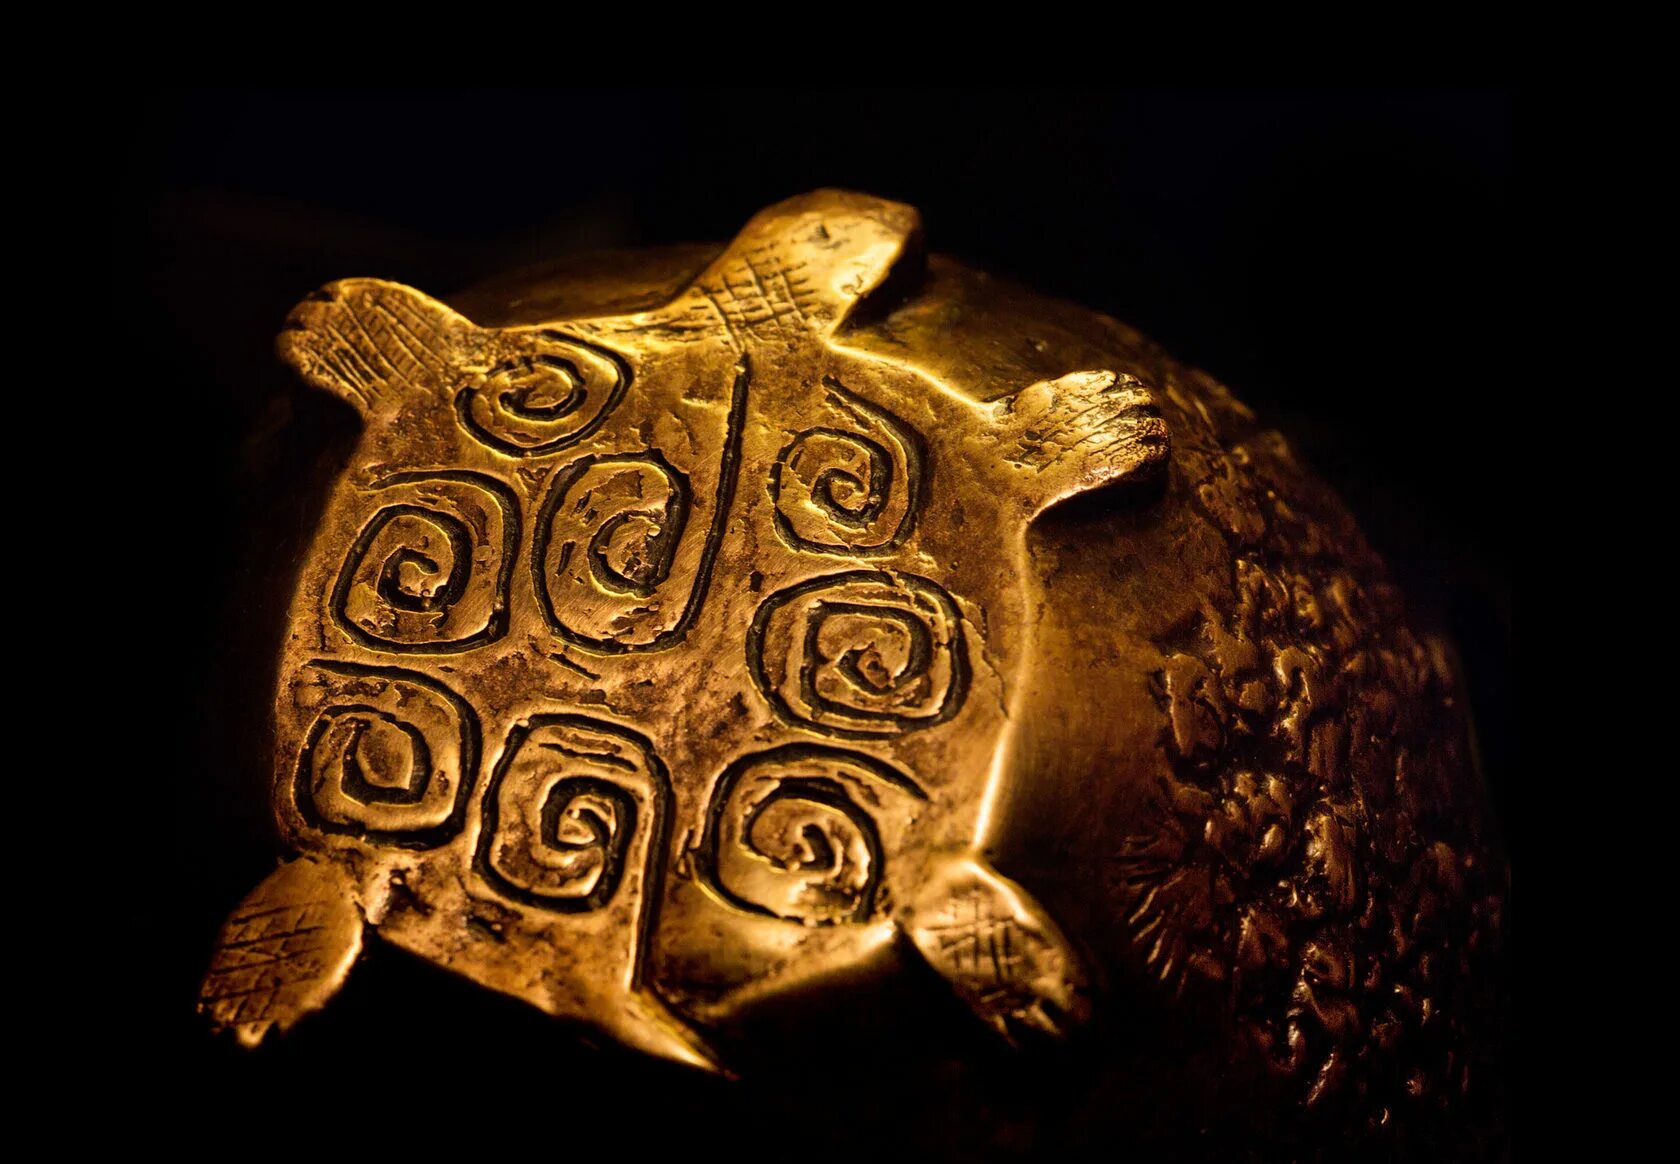 Конкурс черепаха. Золотая черепаха. Творческий конкурс «Золотая черепаха». Черепаха золото. Золотая непальская черепаха.